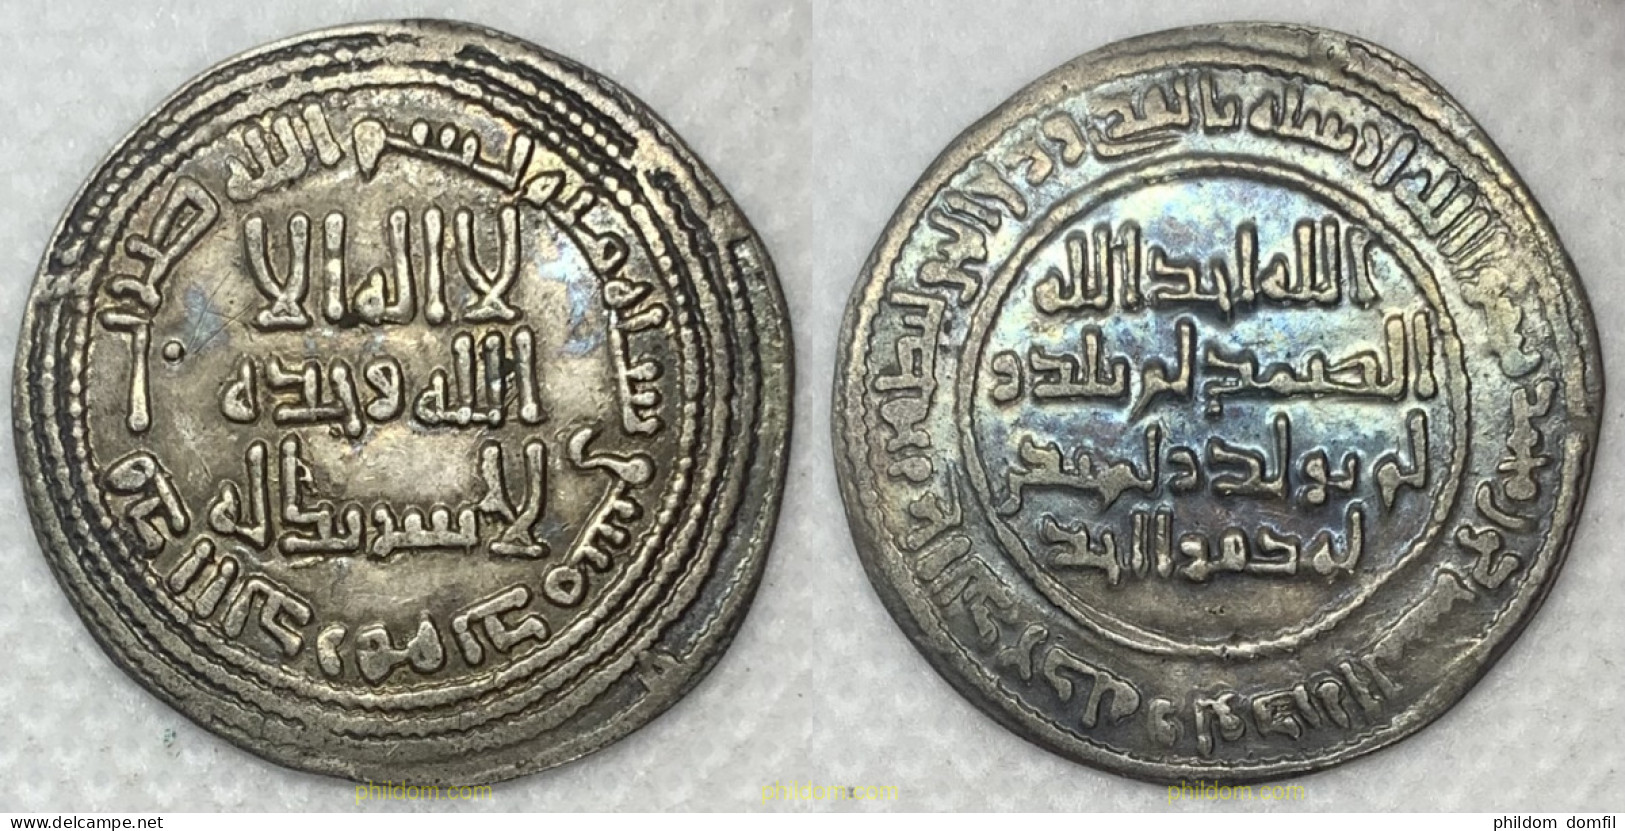 3356 MARRUECOS 0715 UMAYYAD: AL-WALID I B. 'ABD AL-MALIK (705-715), SILVER DIRHAM - Maroc